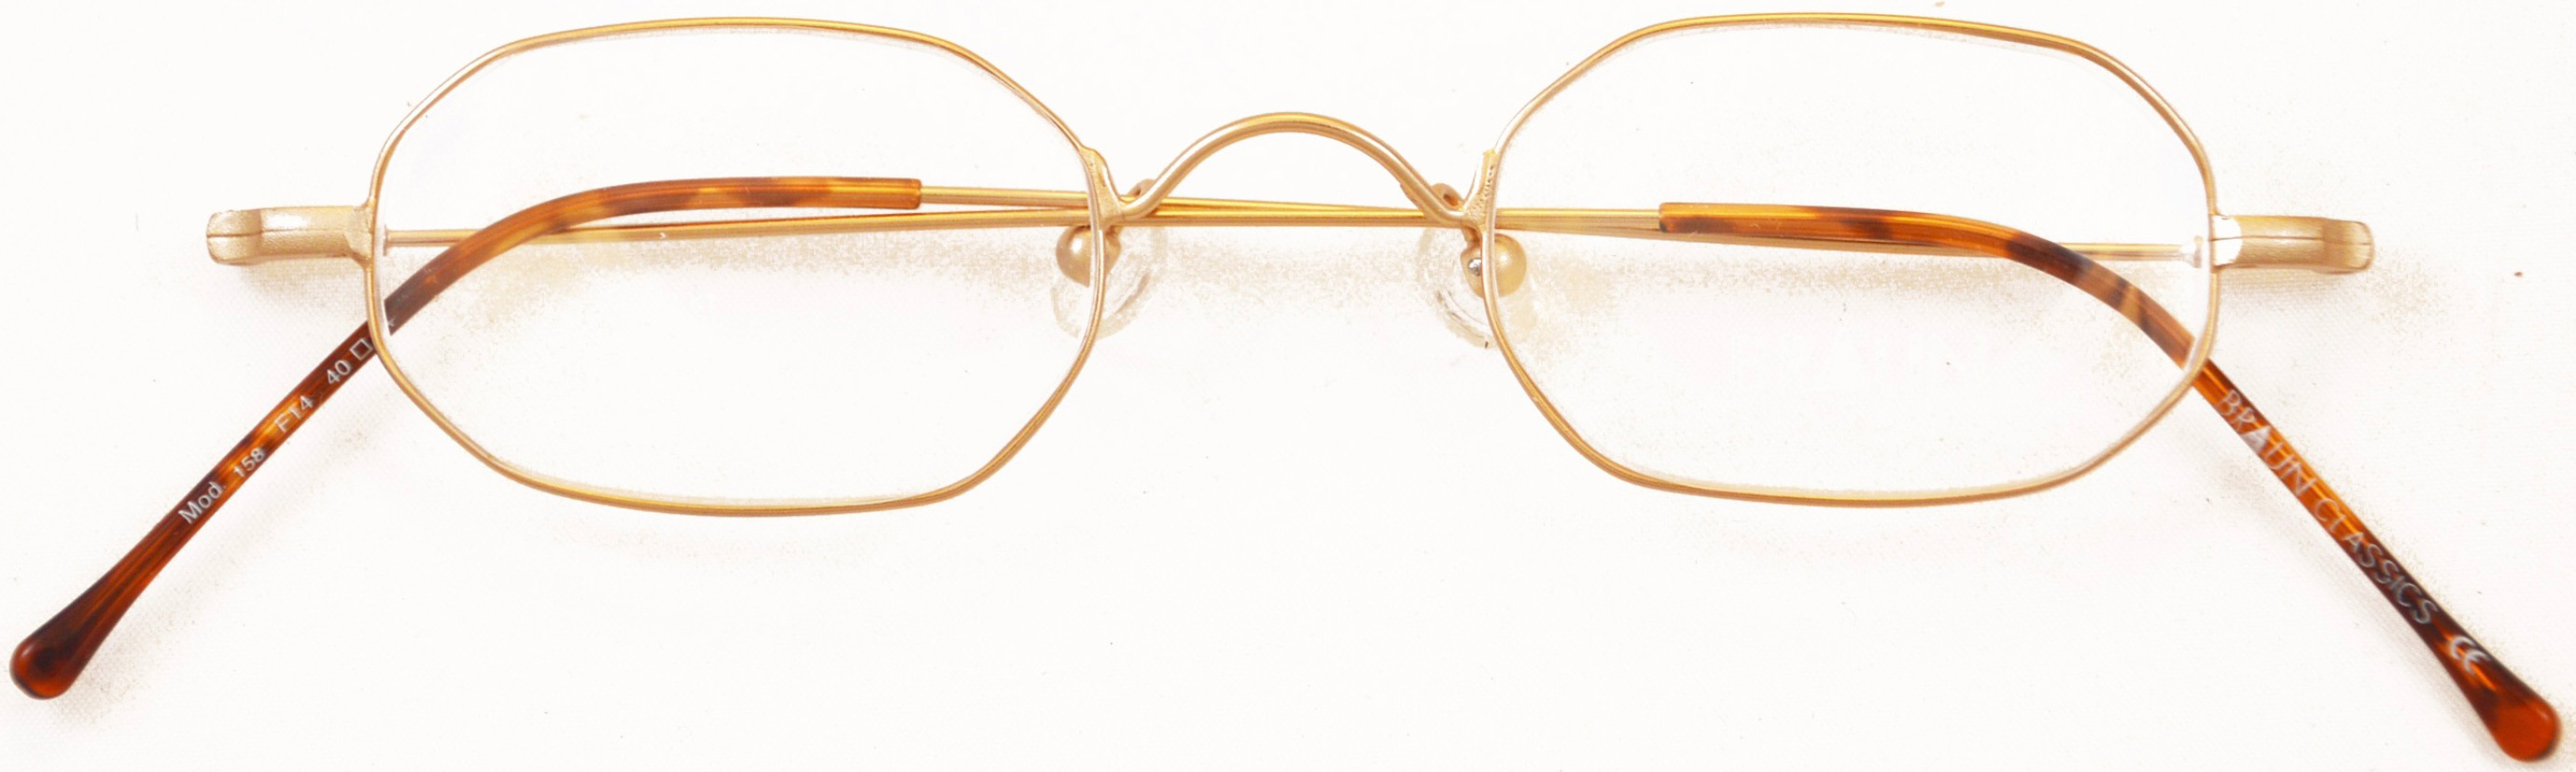 Antique Monocle J1723 Eyeglasses Frames by Timeless Eyewear